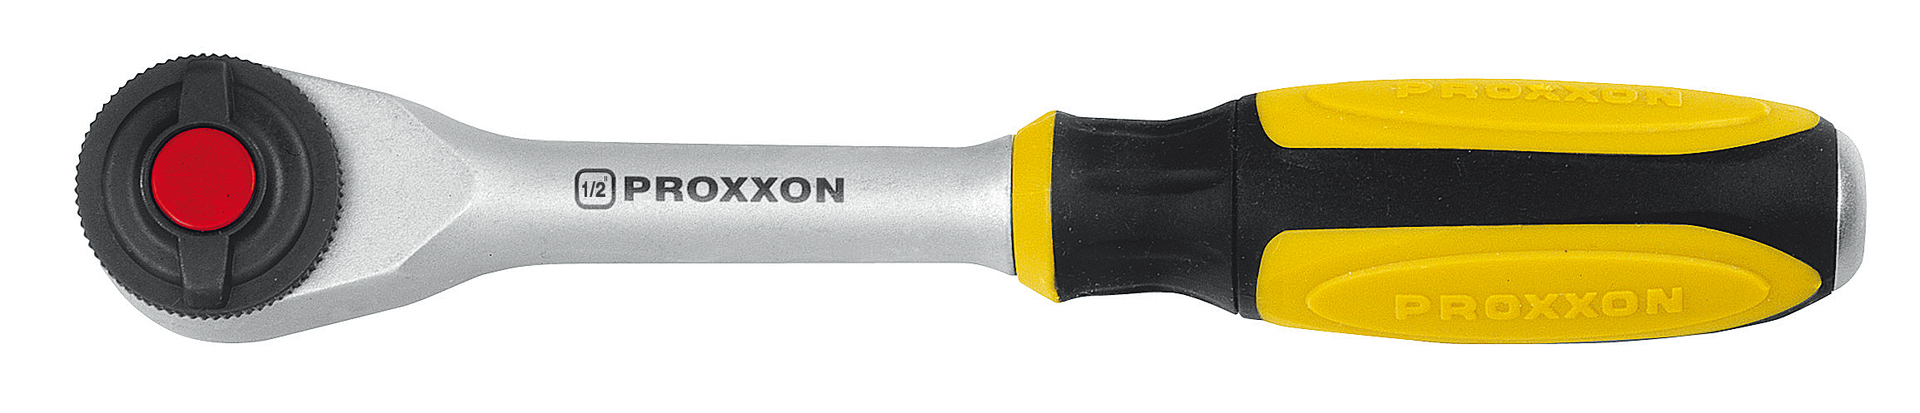 PROXXON GmbH Rotary-Ratsche